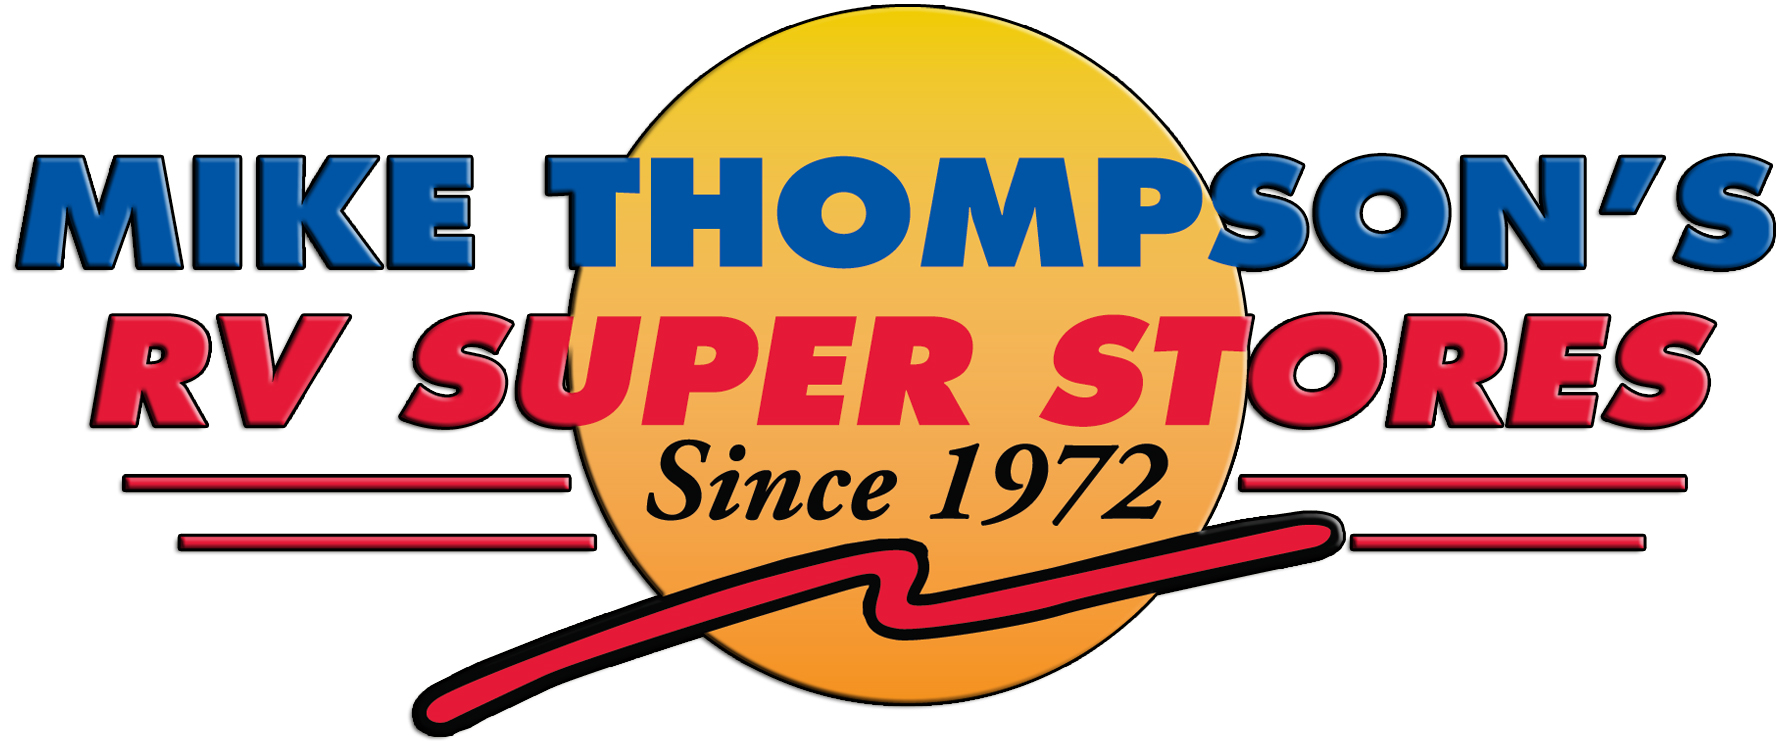 Mike Thompson's RV Super Stores logo